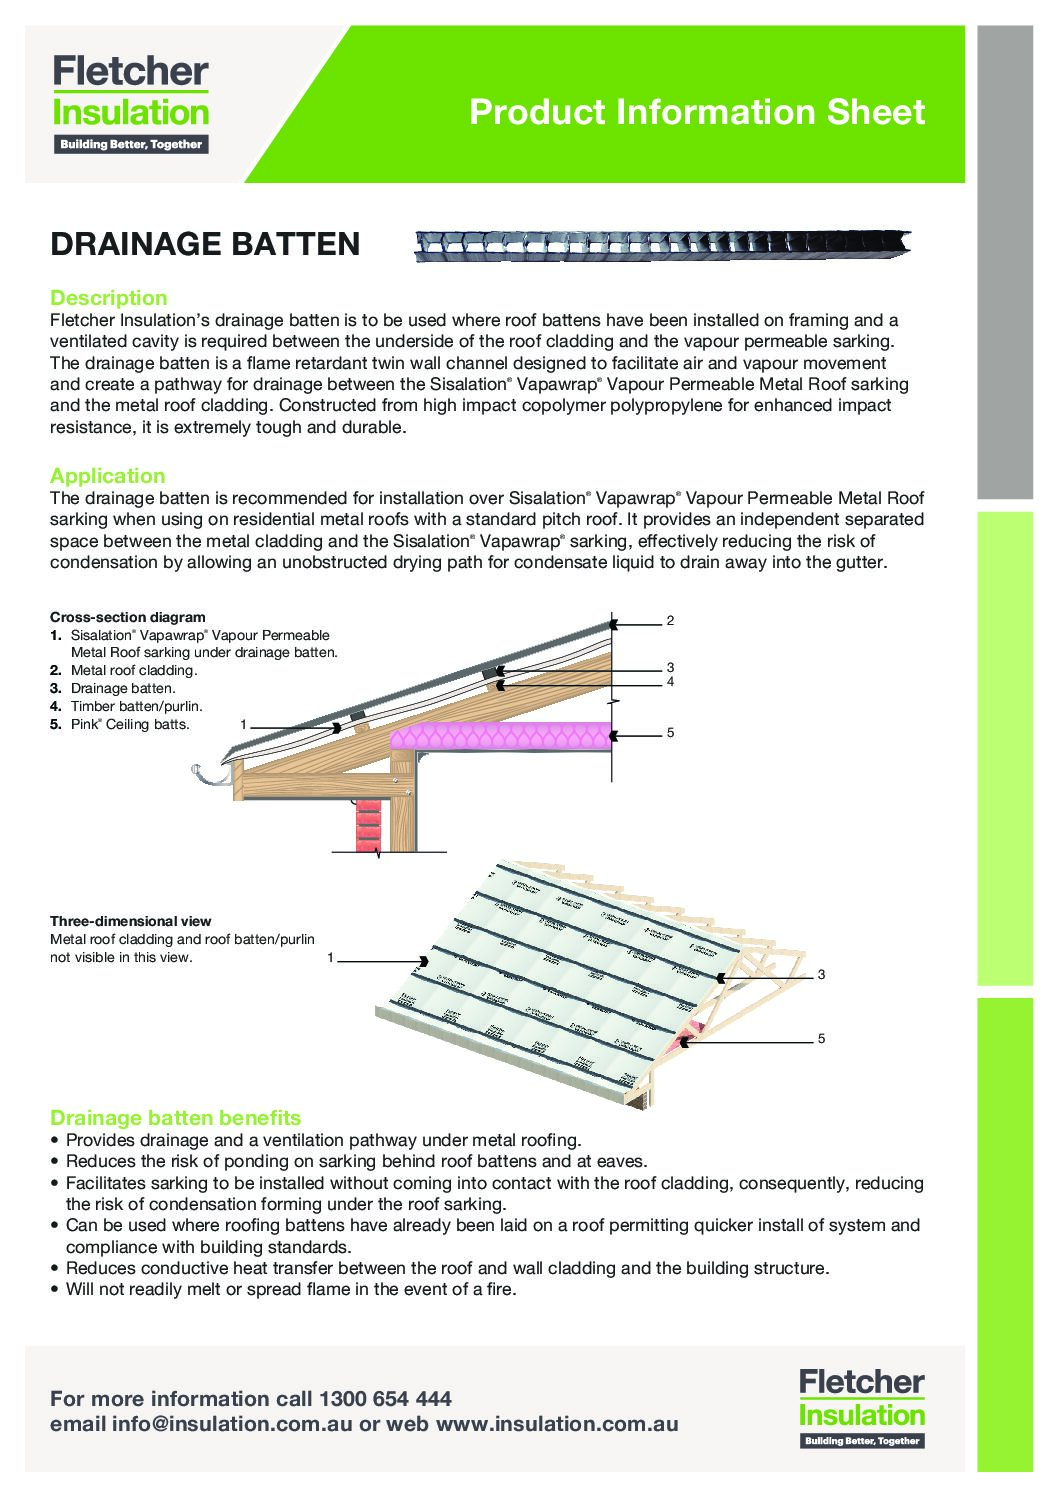 Drainage Batten Product Information Sheet